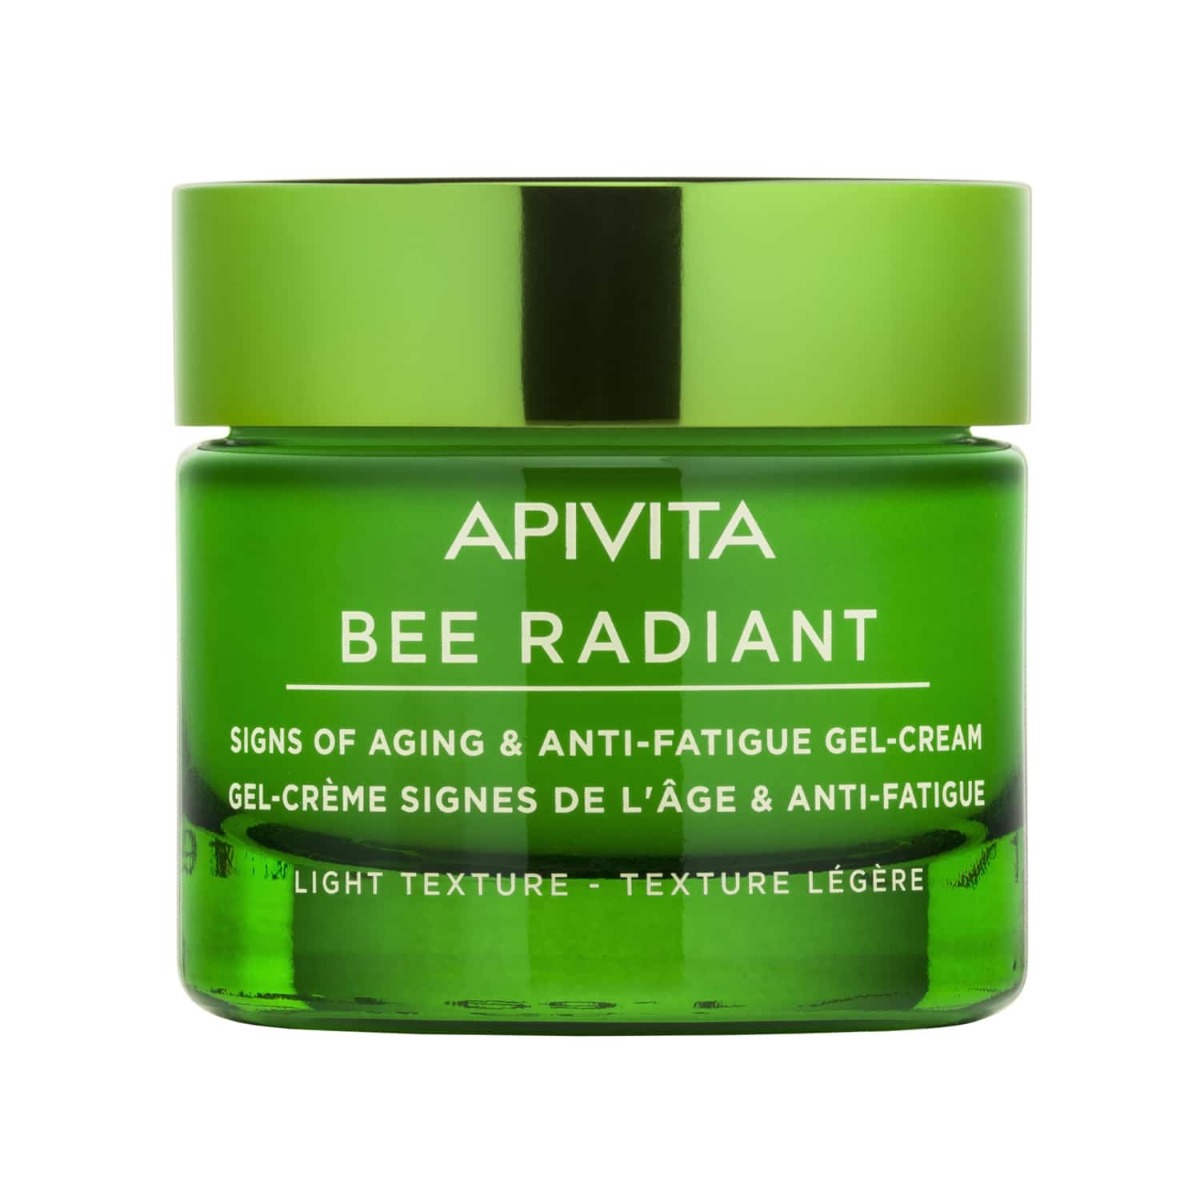 Apivita | Bee Radiant Κρέμα-Gel Ελαφριάς Υφής για Σημάδια Γήρανσης & Ξεκούραστη Όψη | 50ml